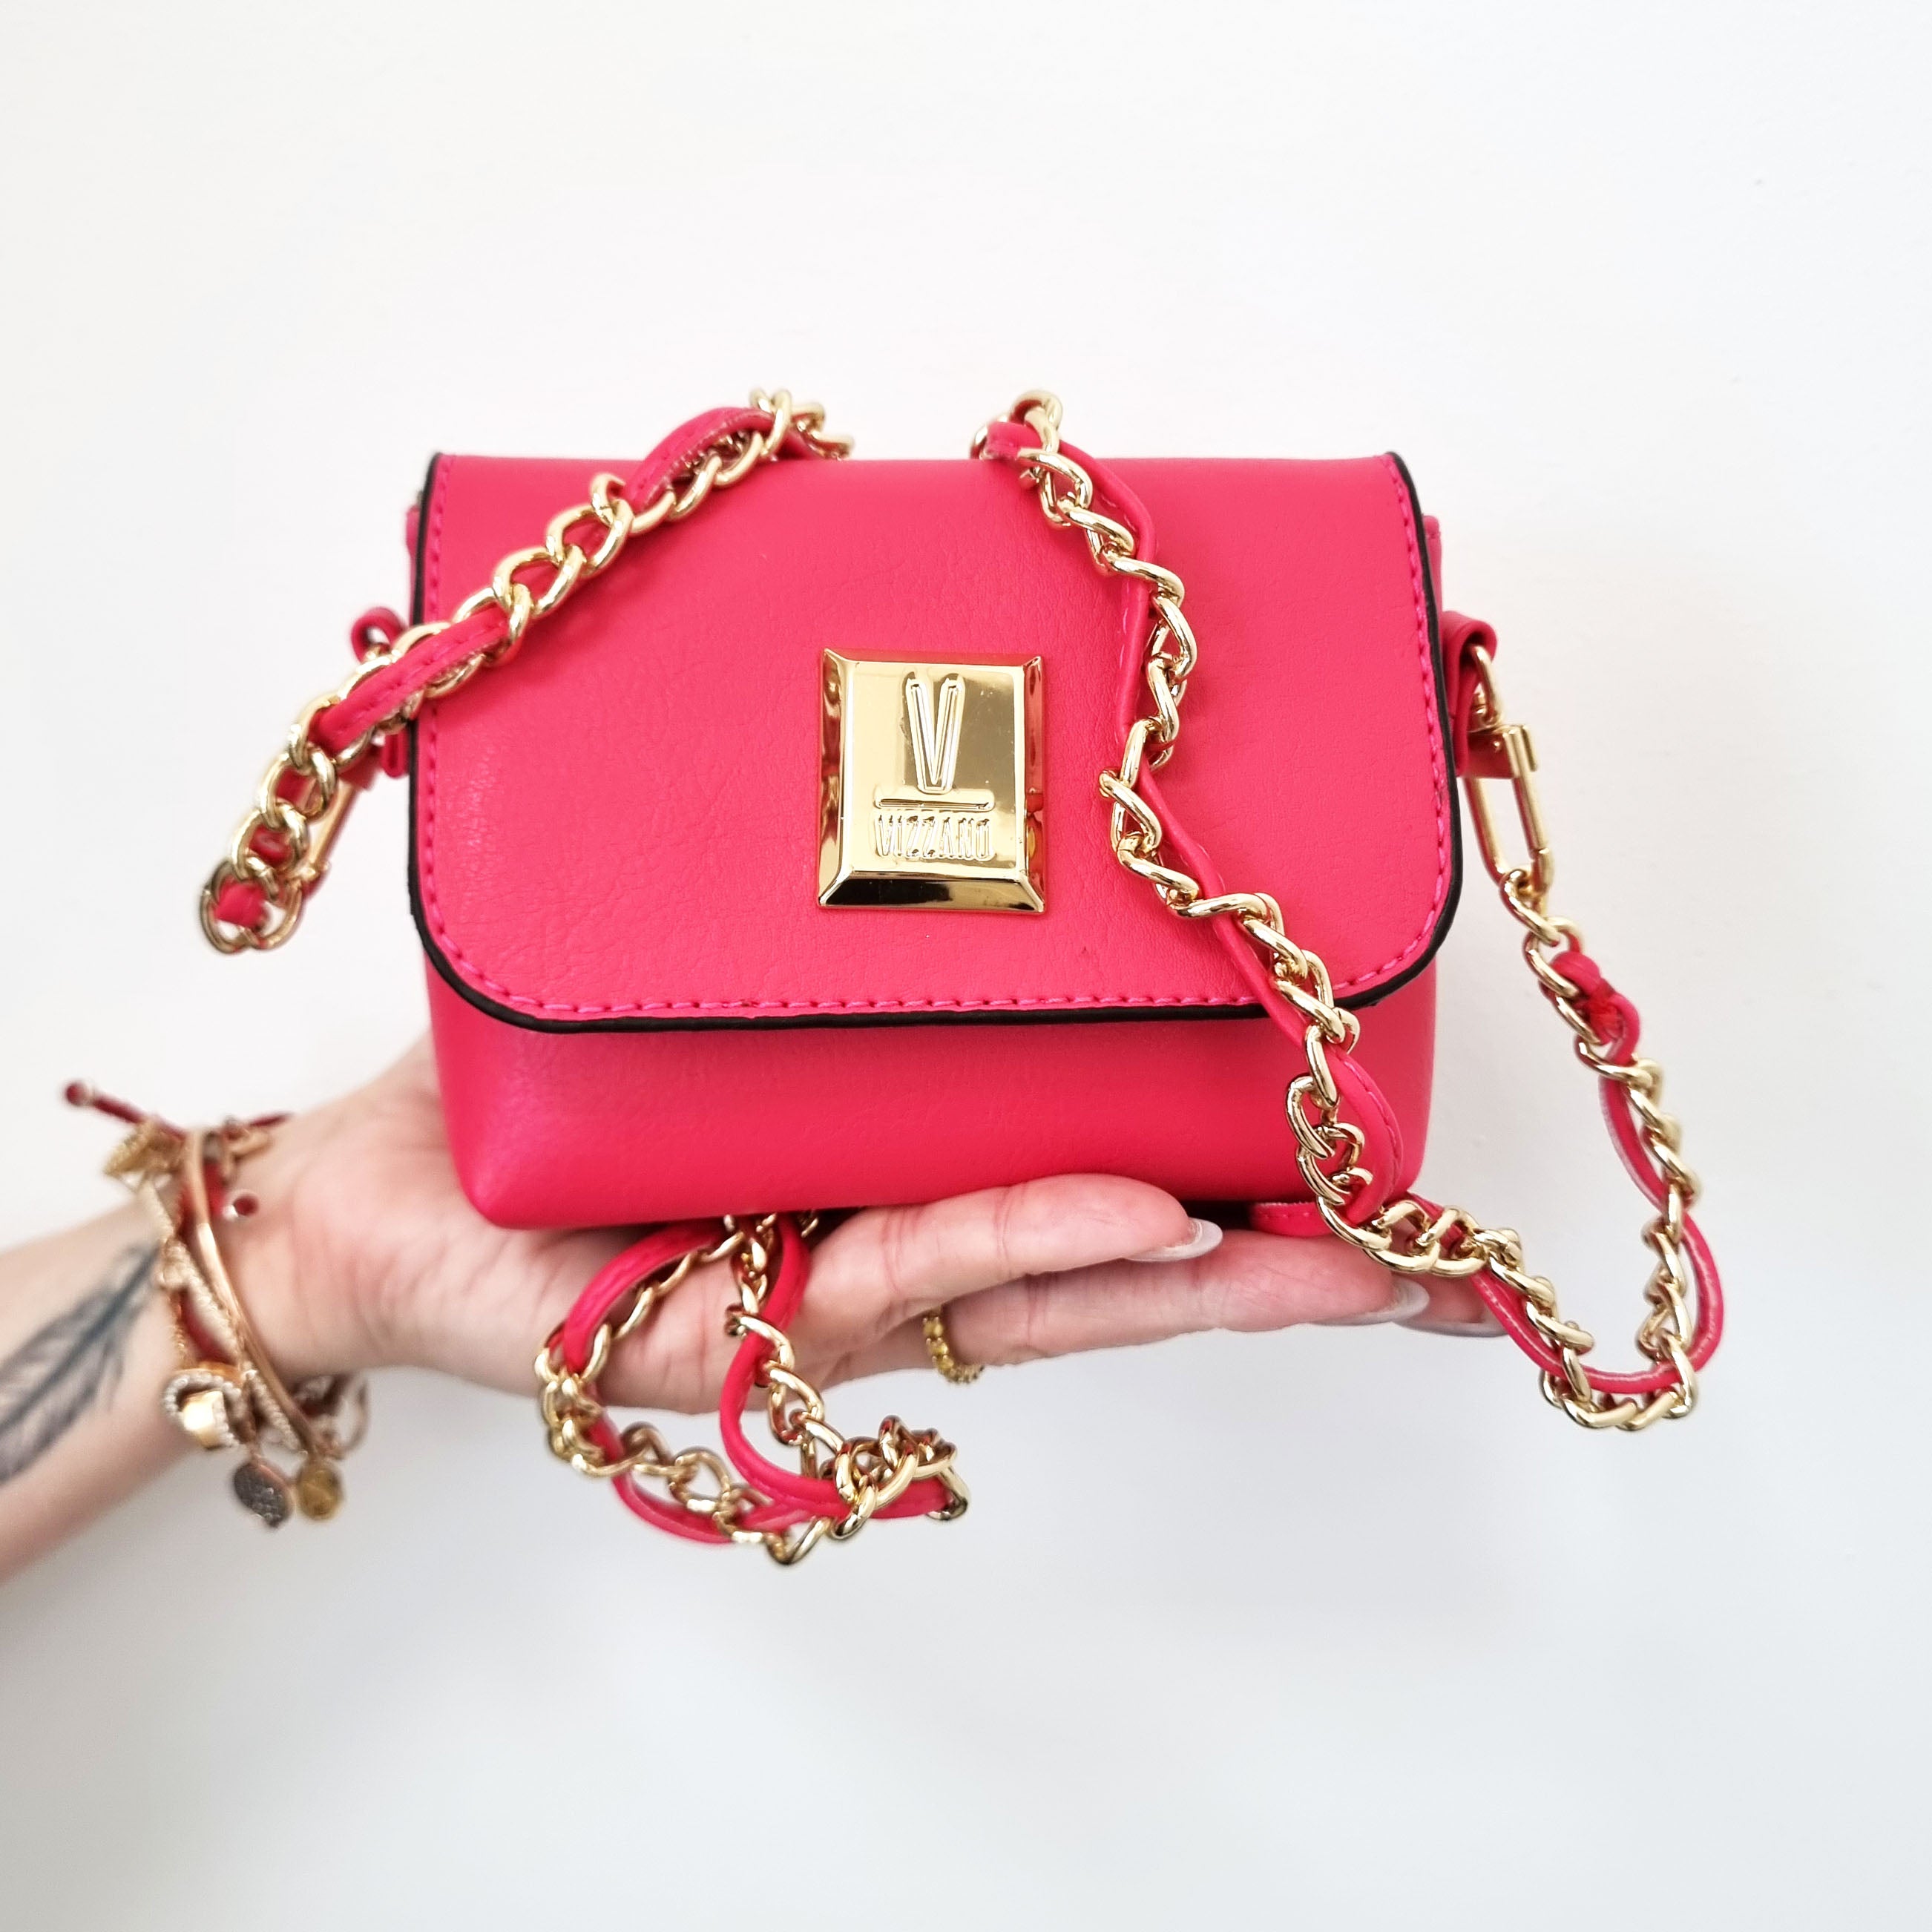 Vizzano 10047-1 Shoulder Bag in Pink Gloss